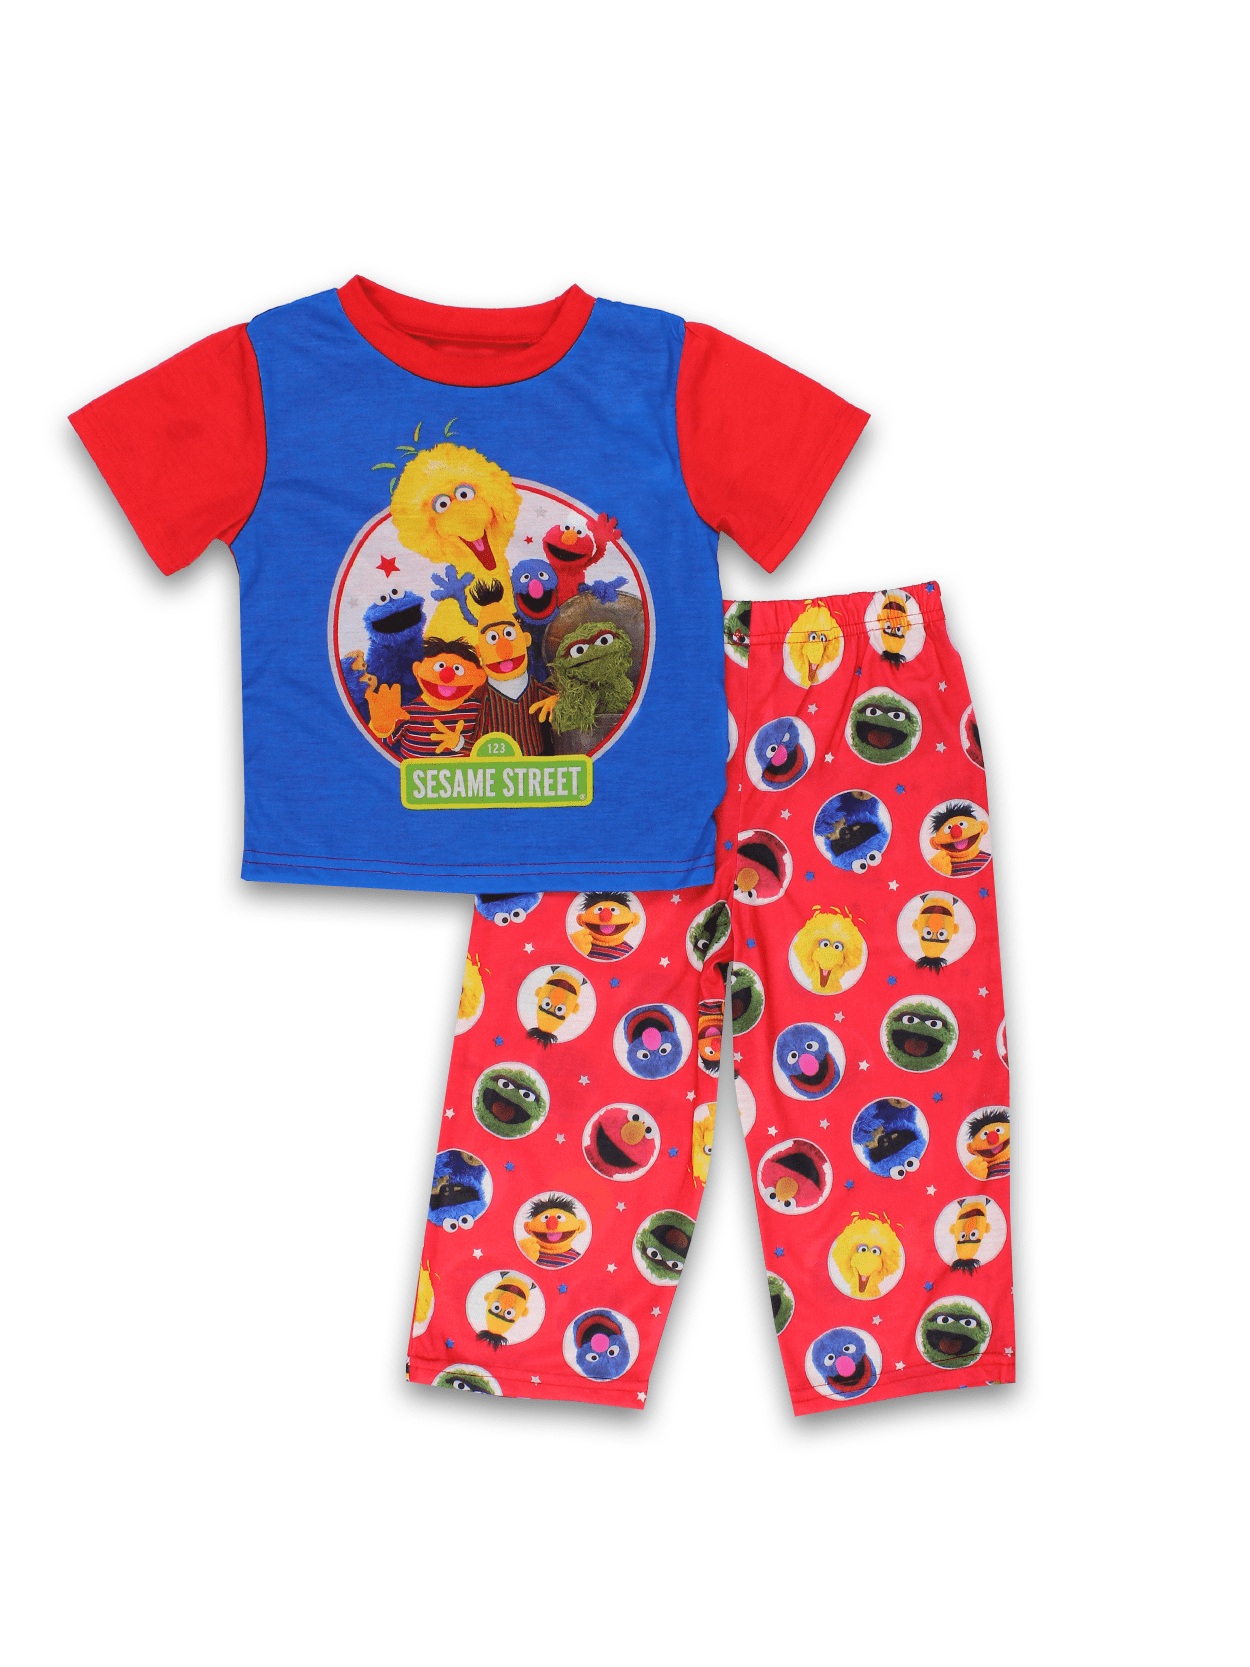 Micky Mouse Paw Patrol Elmo 2 Piece Pajamas Set Toddler Boys Size 2T 3T 